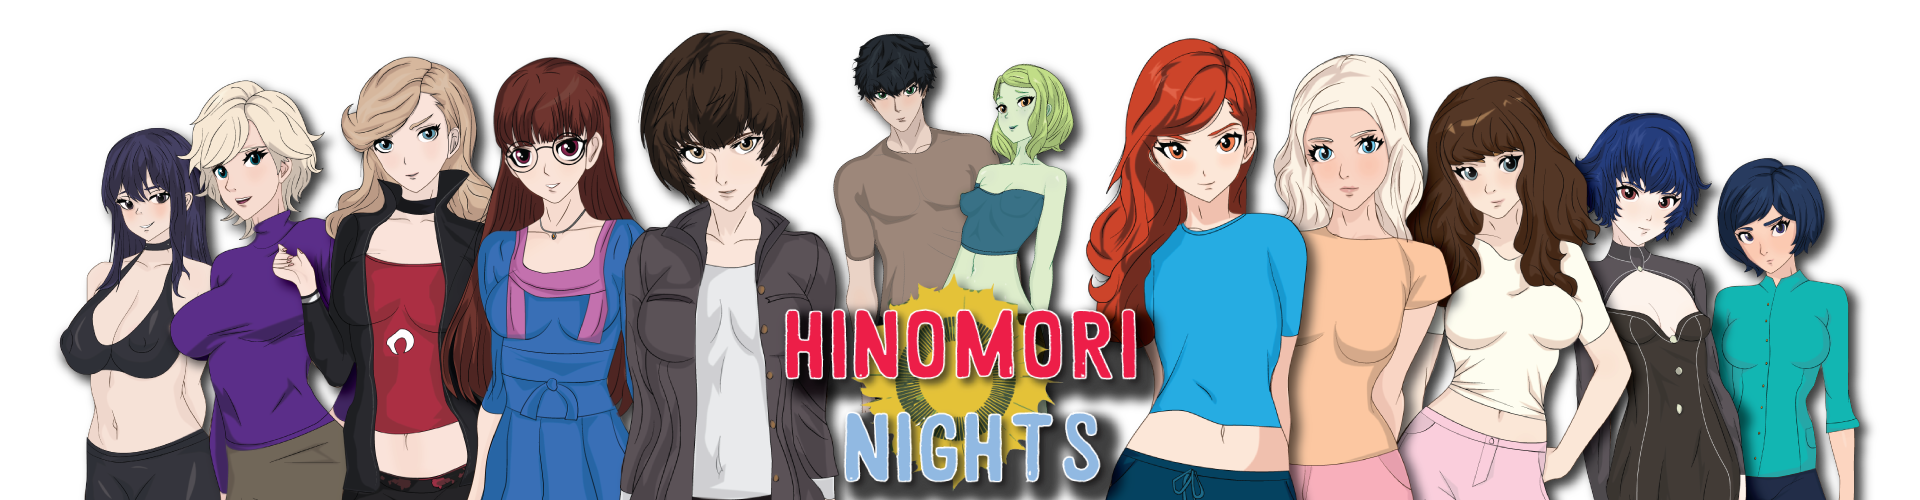 Hinomori Nights (Private Link)